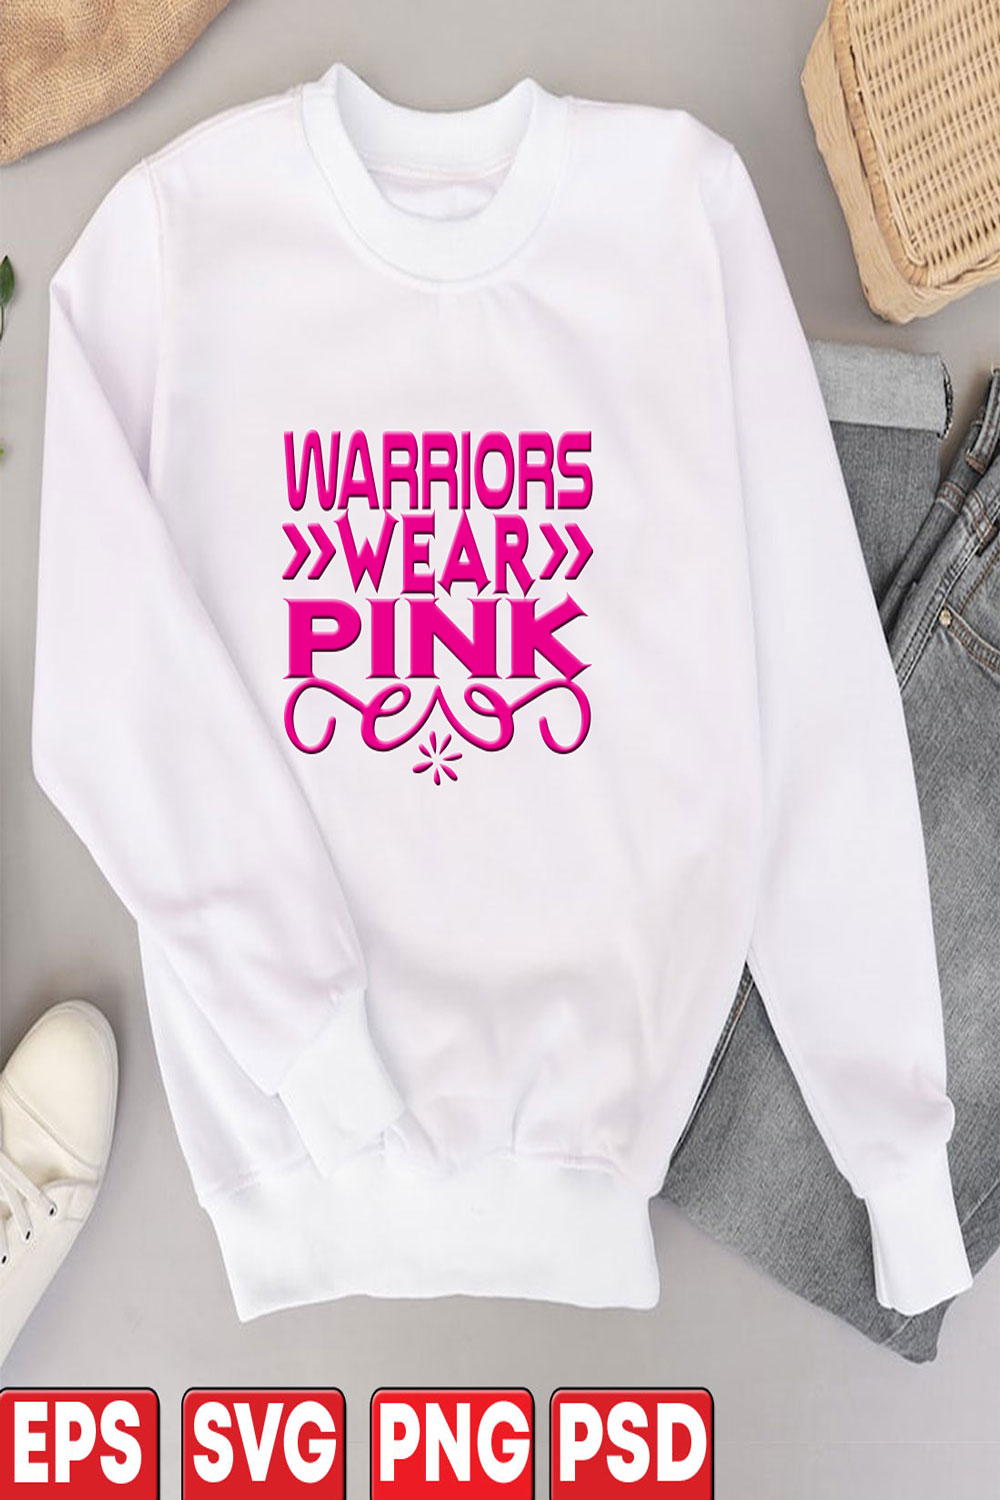 Warriors-Wear-pink pinterest preview image.